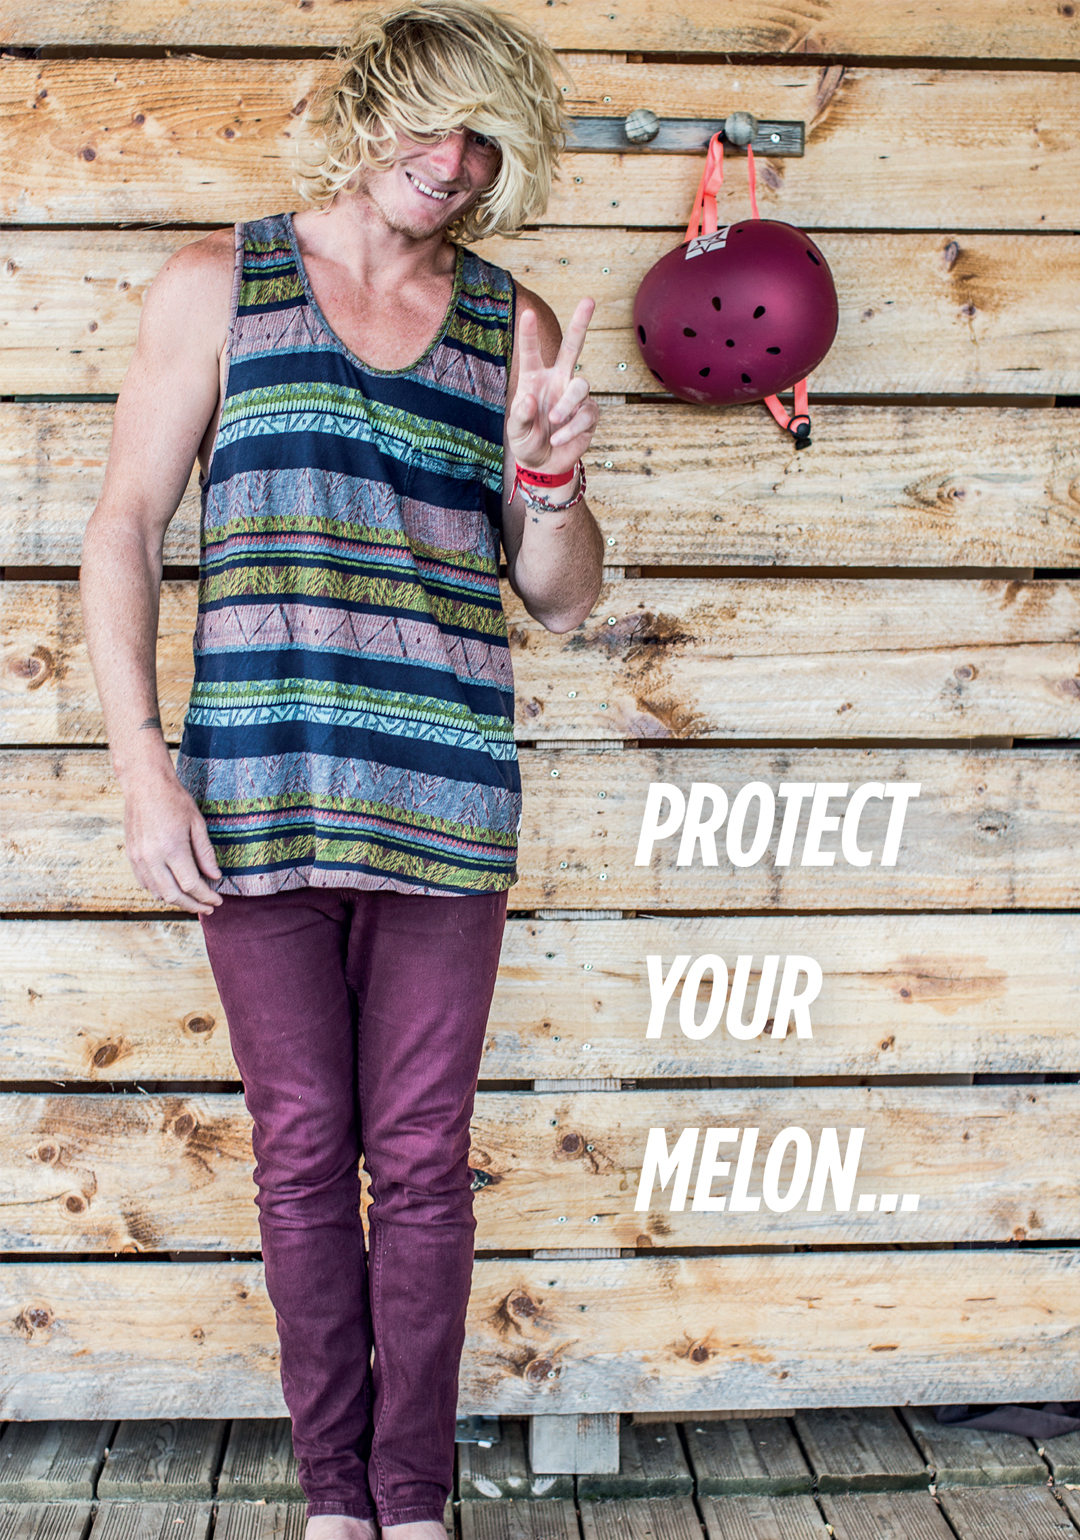 Protect you melon!